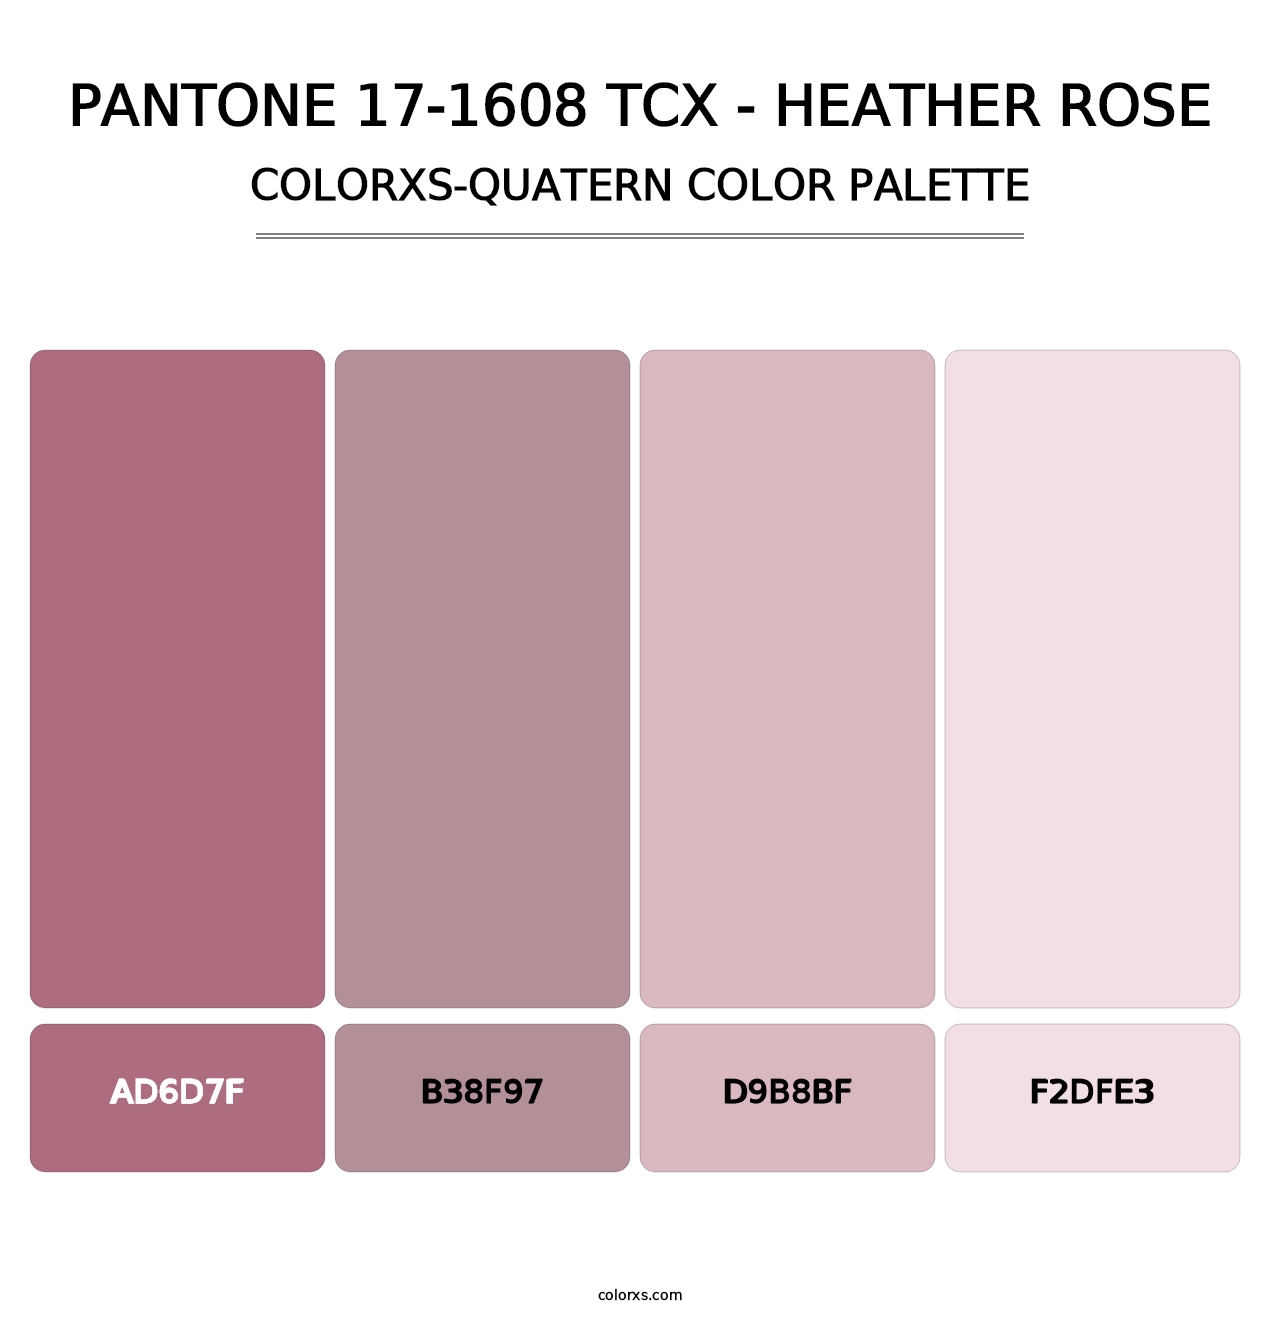 PANTONE 17-1608 TCX - Heather Rose - Colorxs Quatern Palette